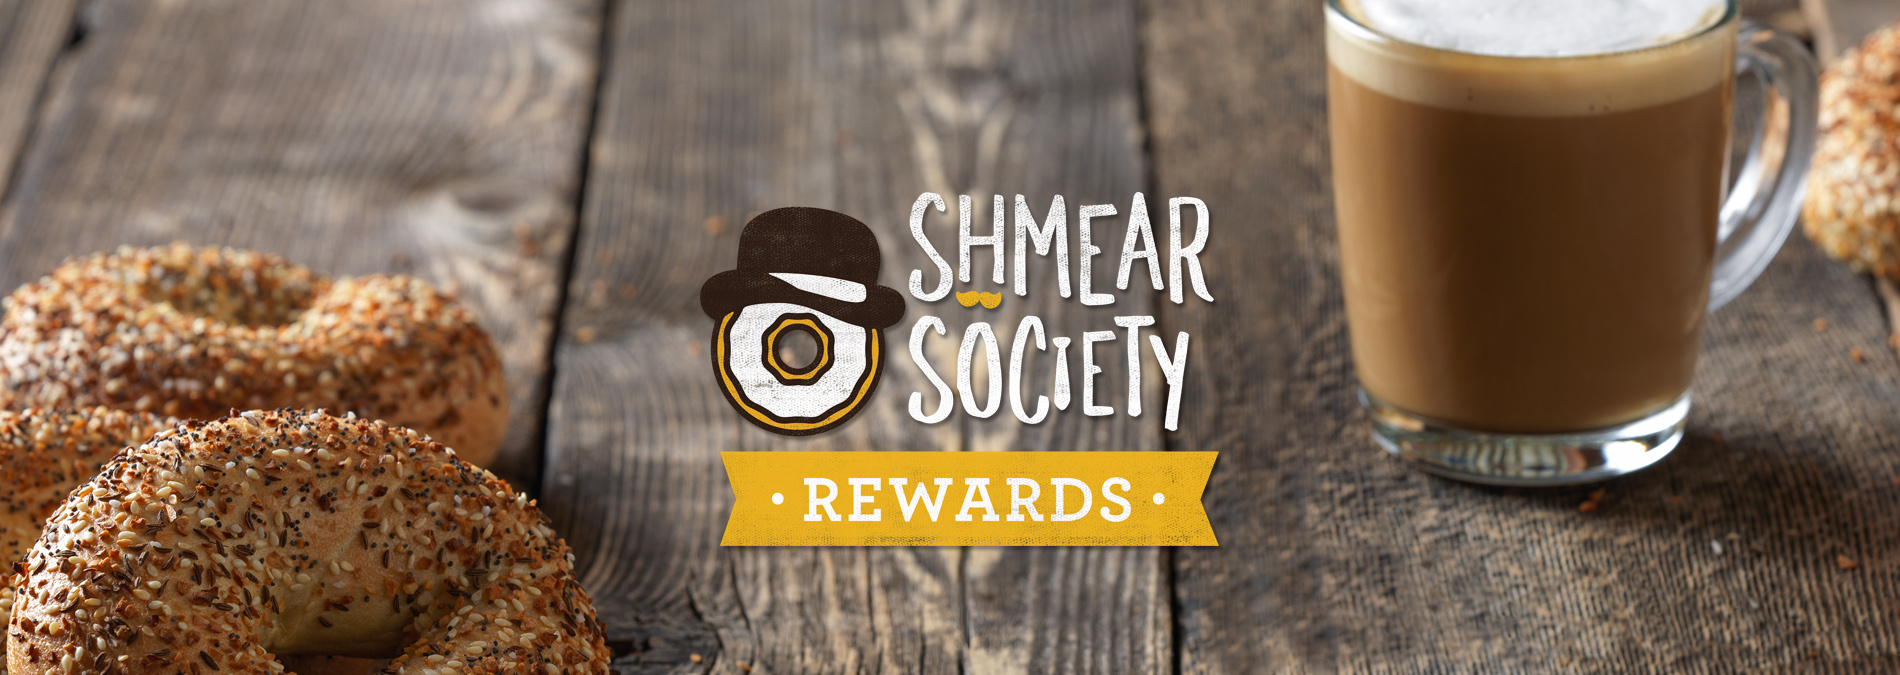 Shmear Society Rewards